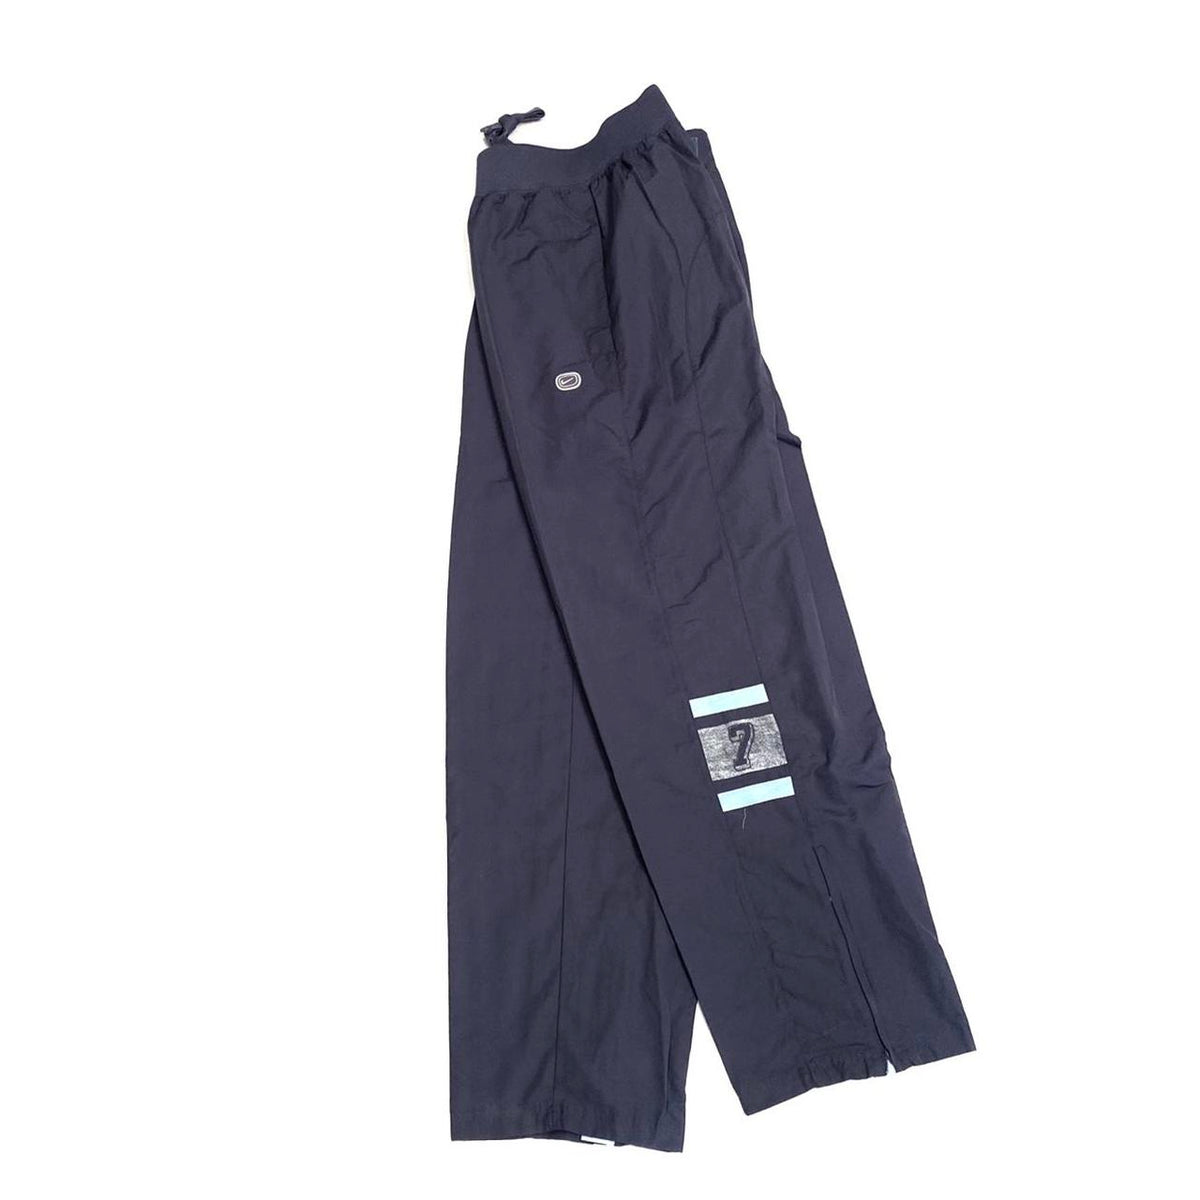 00s Deadstock Vintage Nike Trousers in Dark Grey / Blue